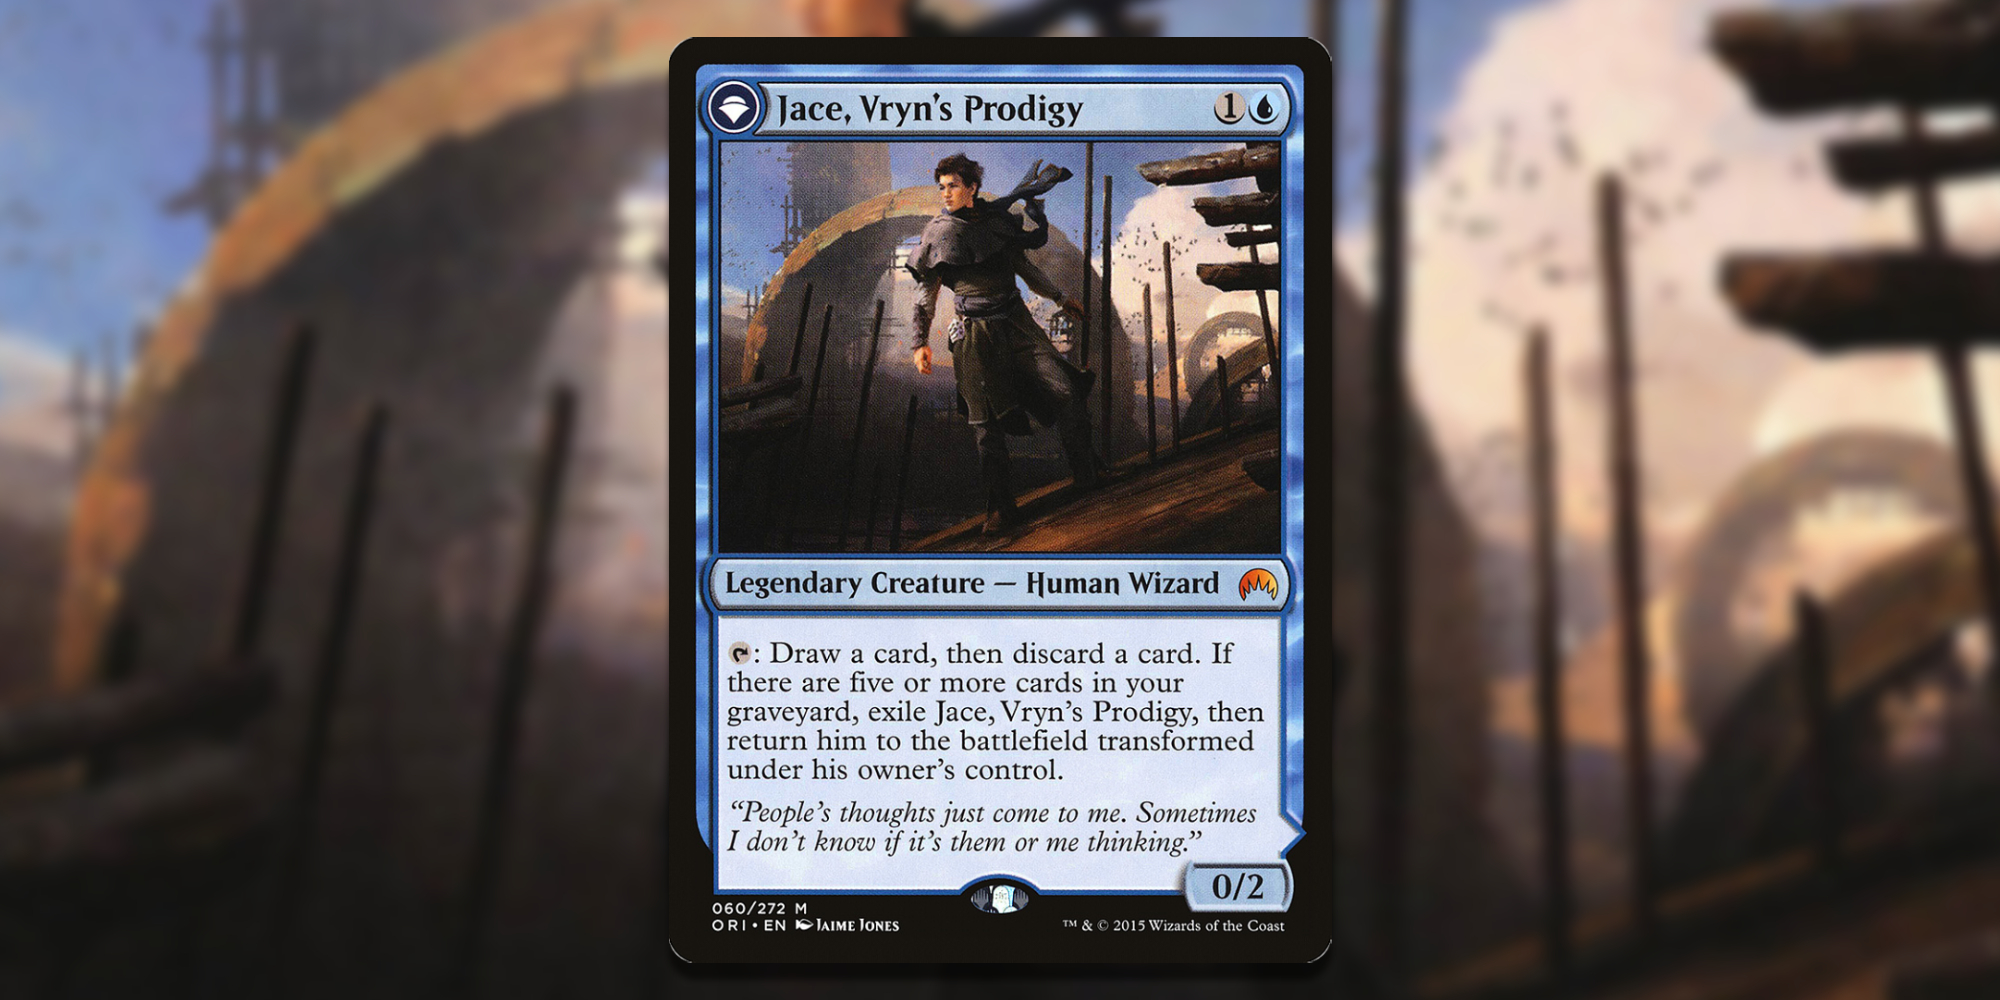 Card of Jace Vryns Prodigy over Art Background